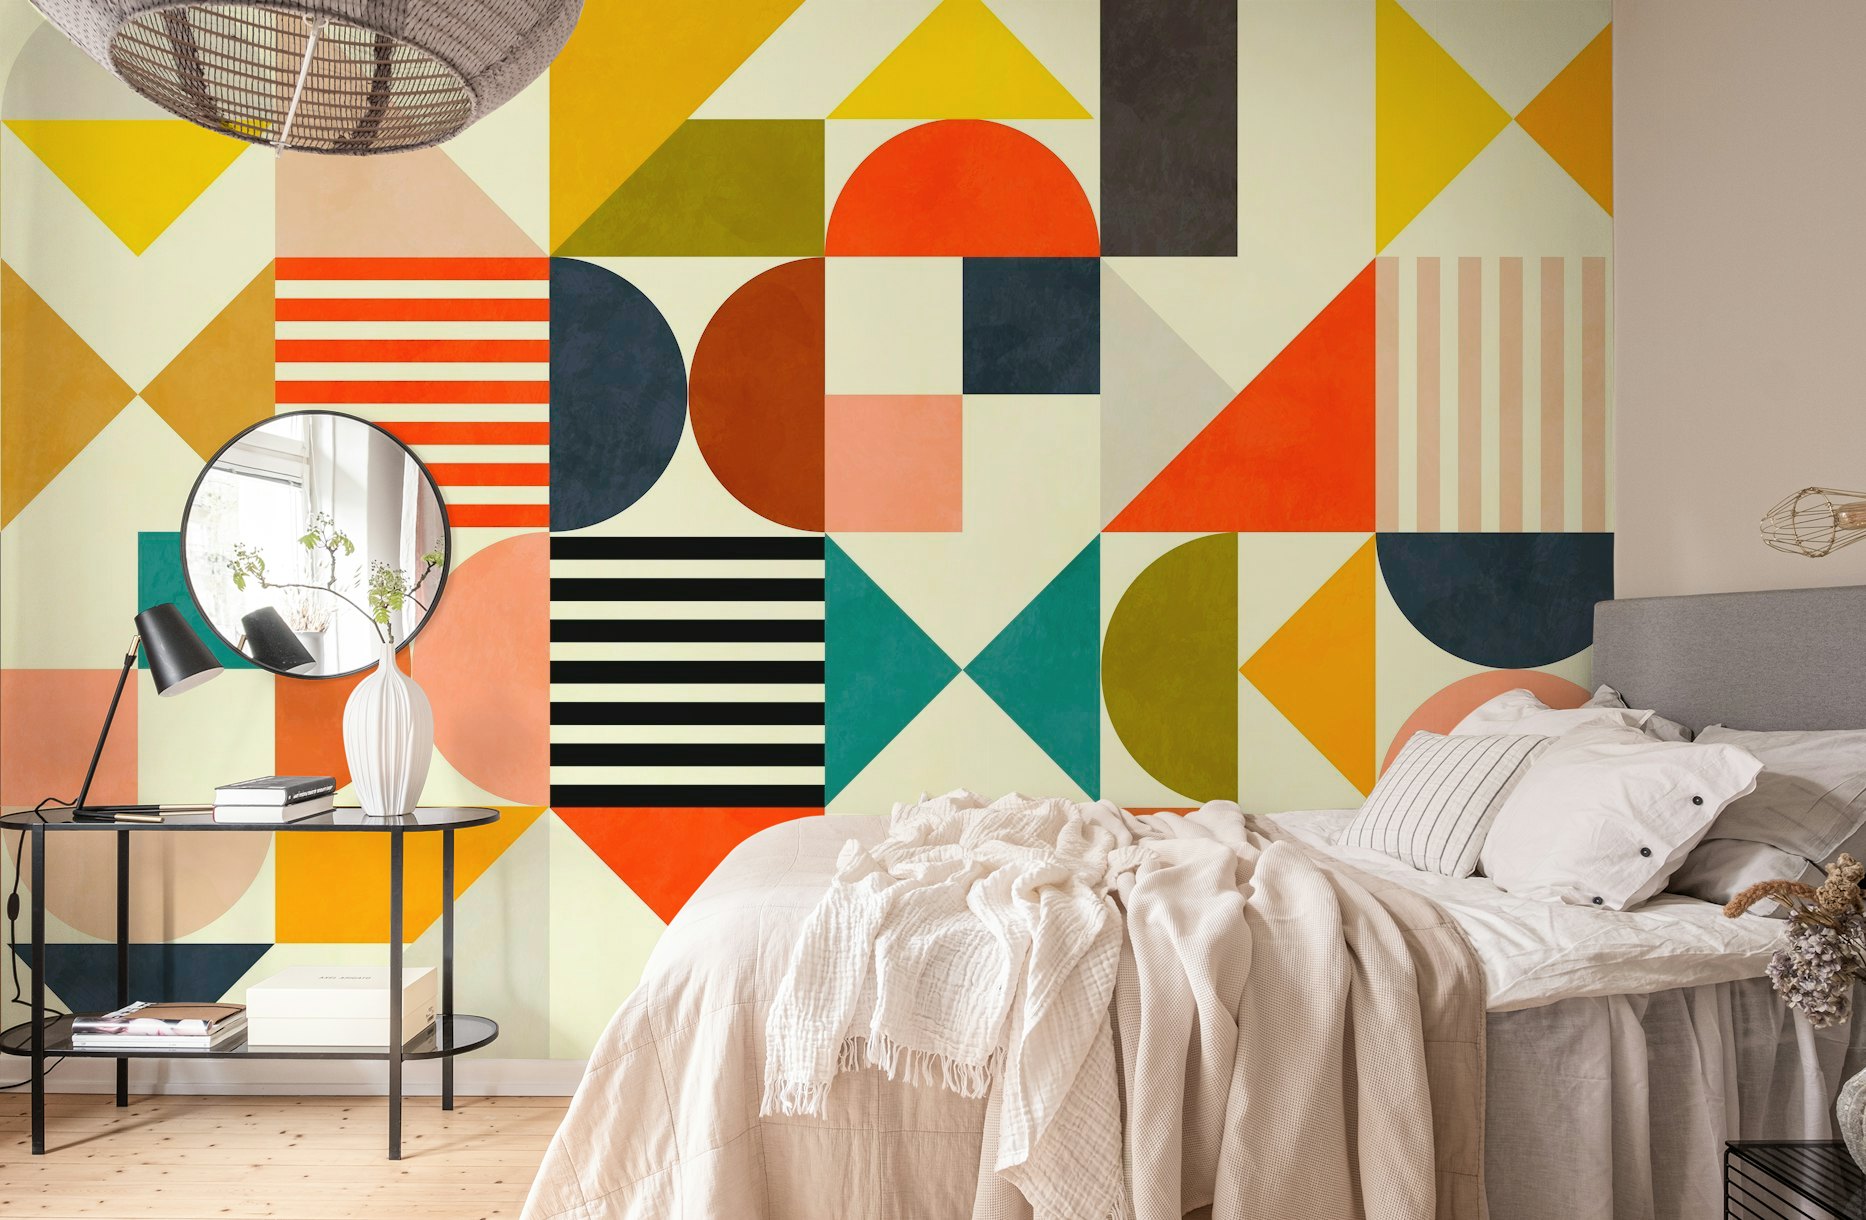 Bauhaus playfull geometric wallpaper